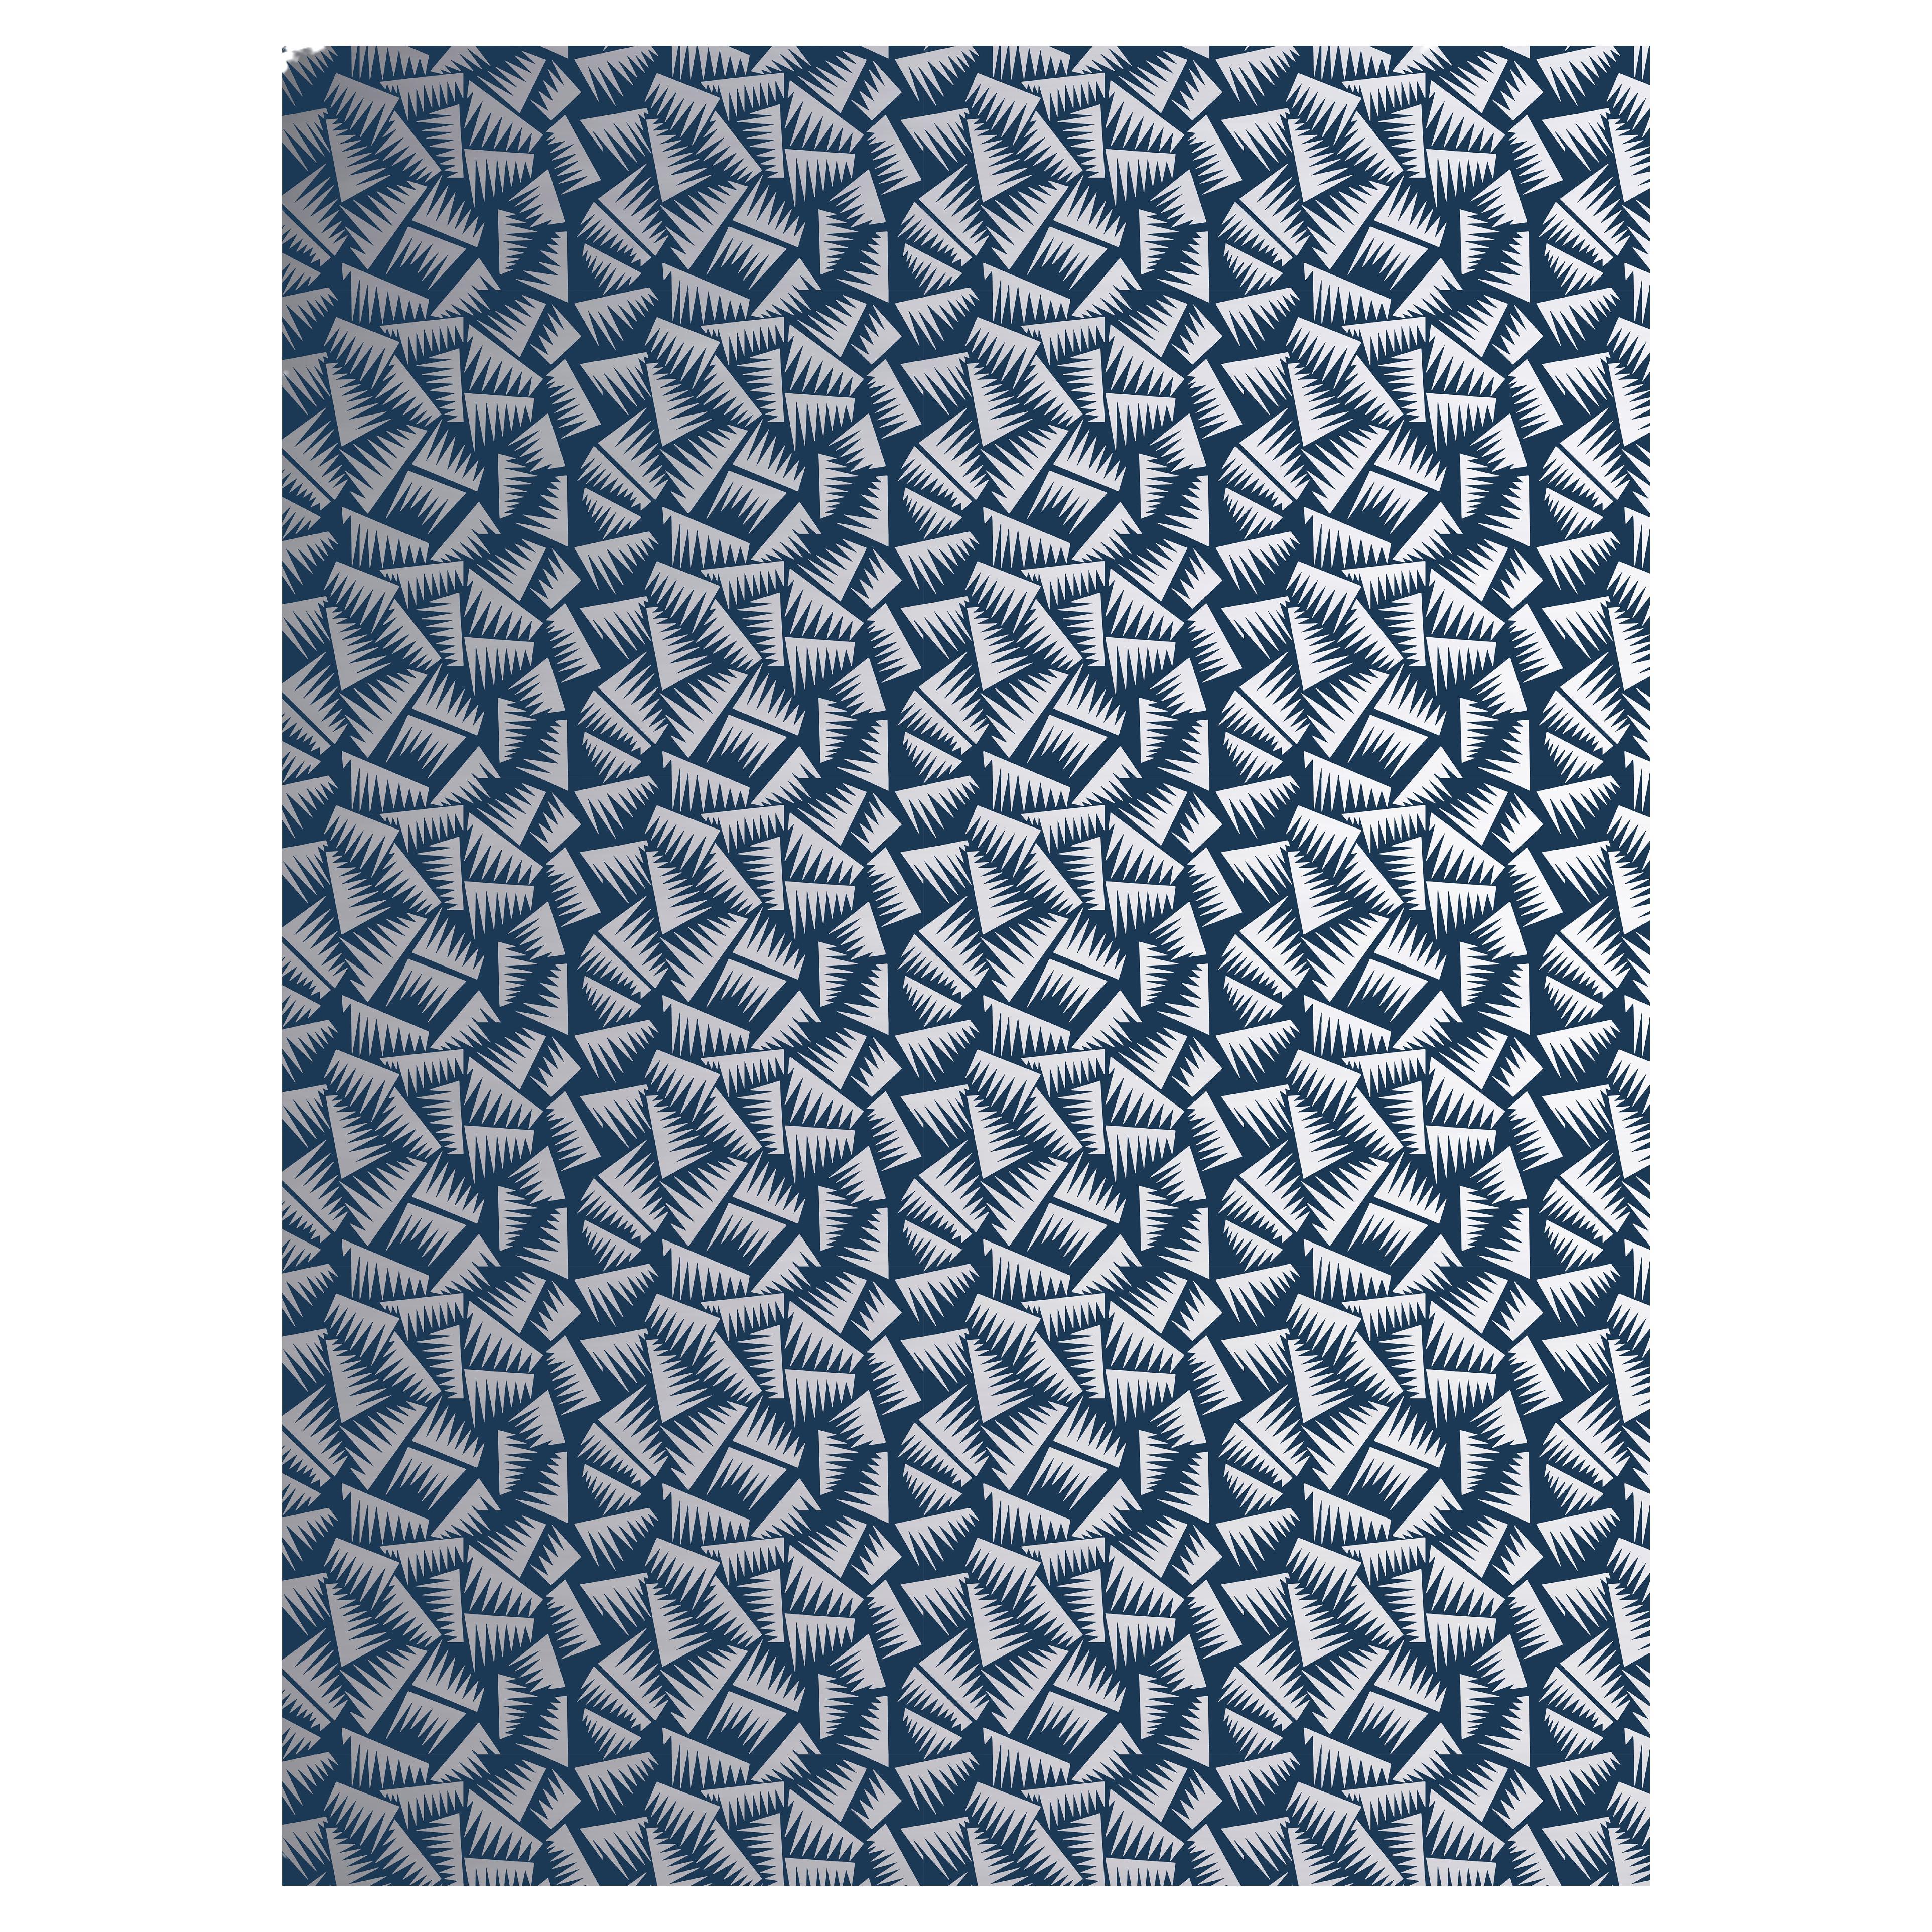 JER Wallpaper - Blue&Grey by Jacques-Emile Ruhlmann for La Chance